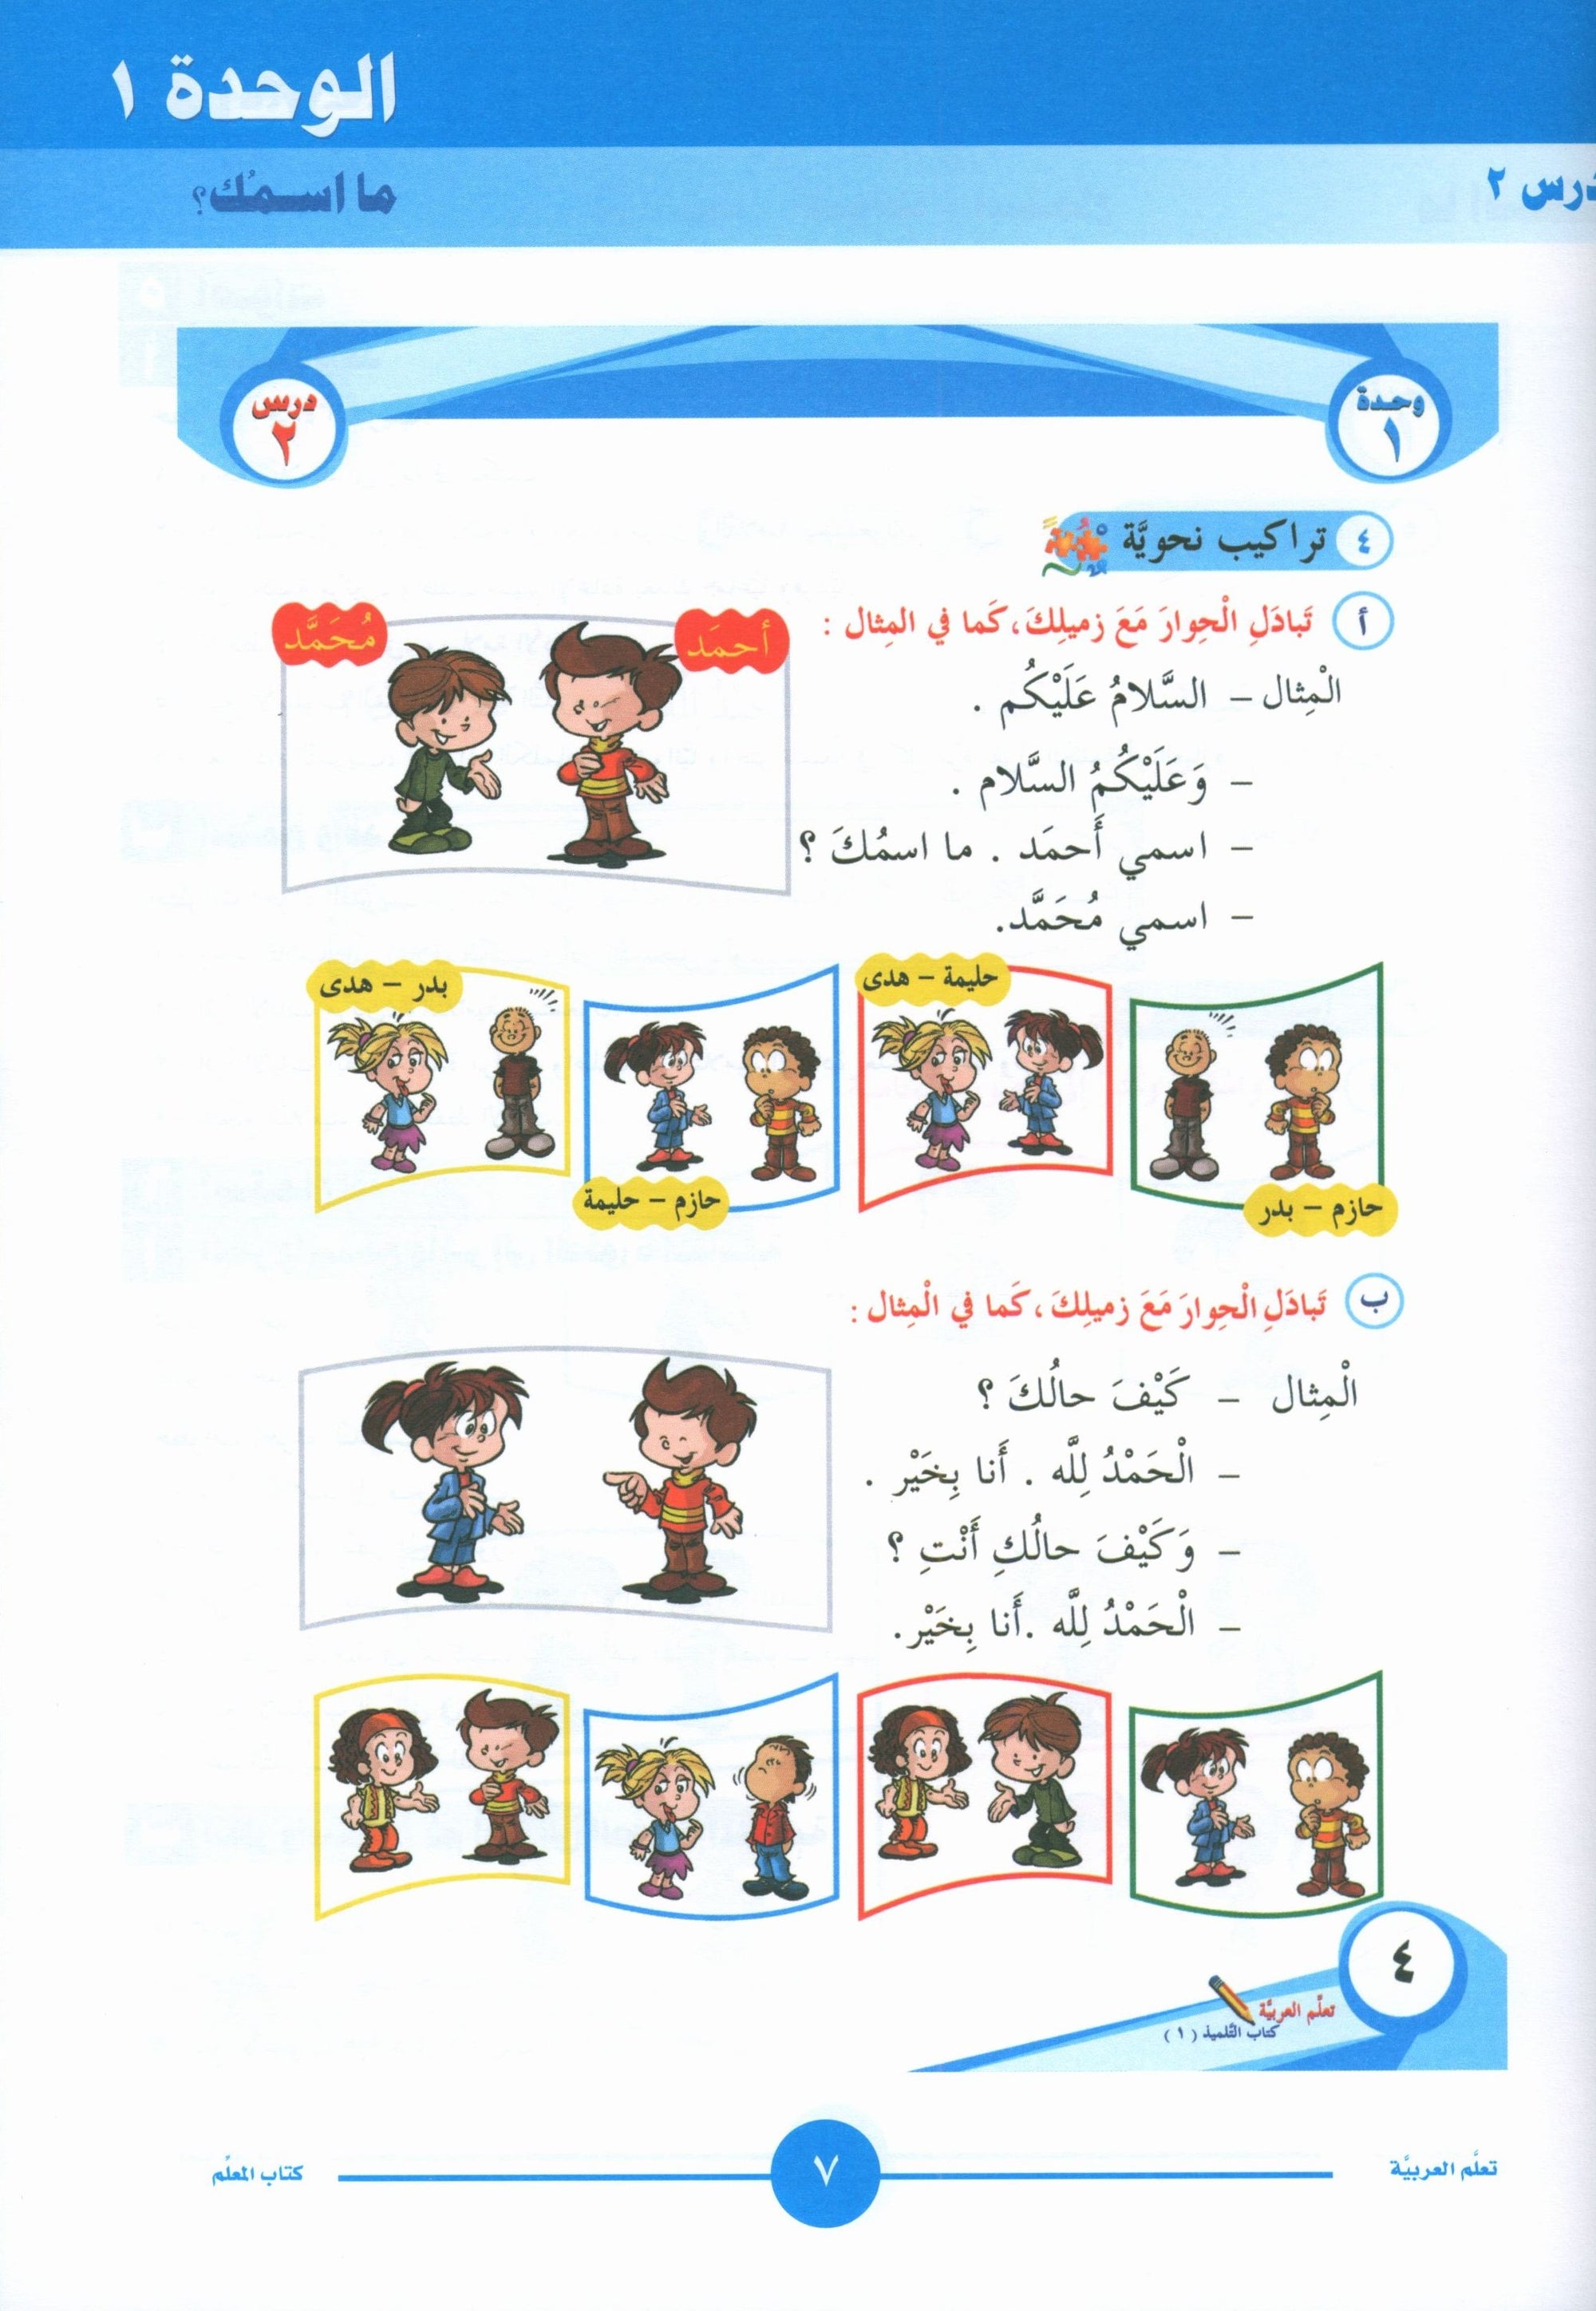 ICO Learn Arabic Teacher Book Level 1 Part 1 تعلم العربية كتاب المعلم